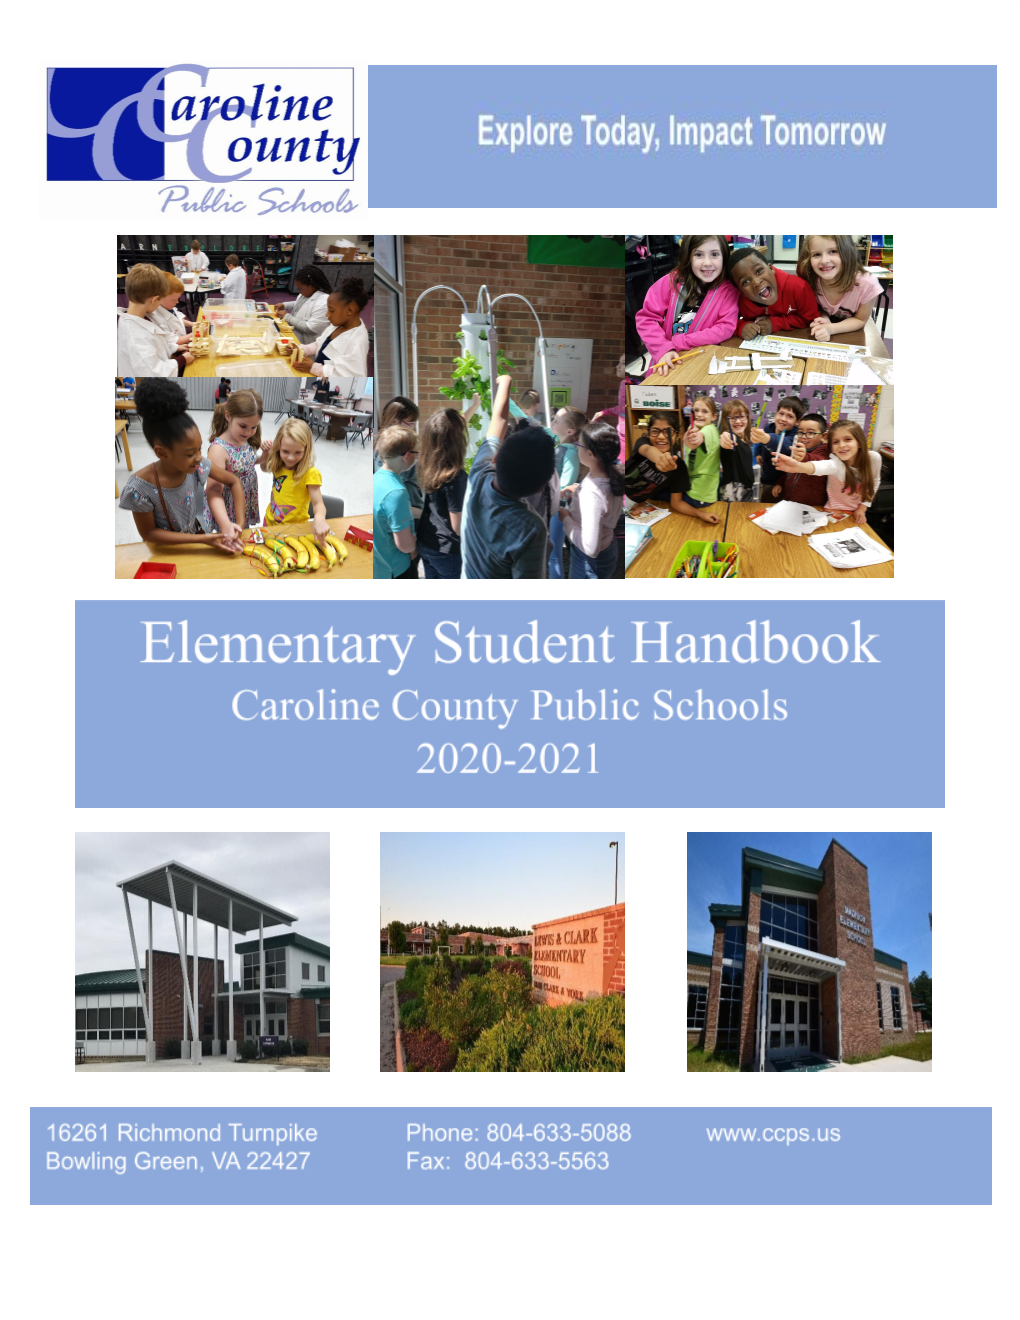 Elementary Handbook